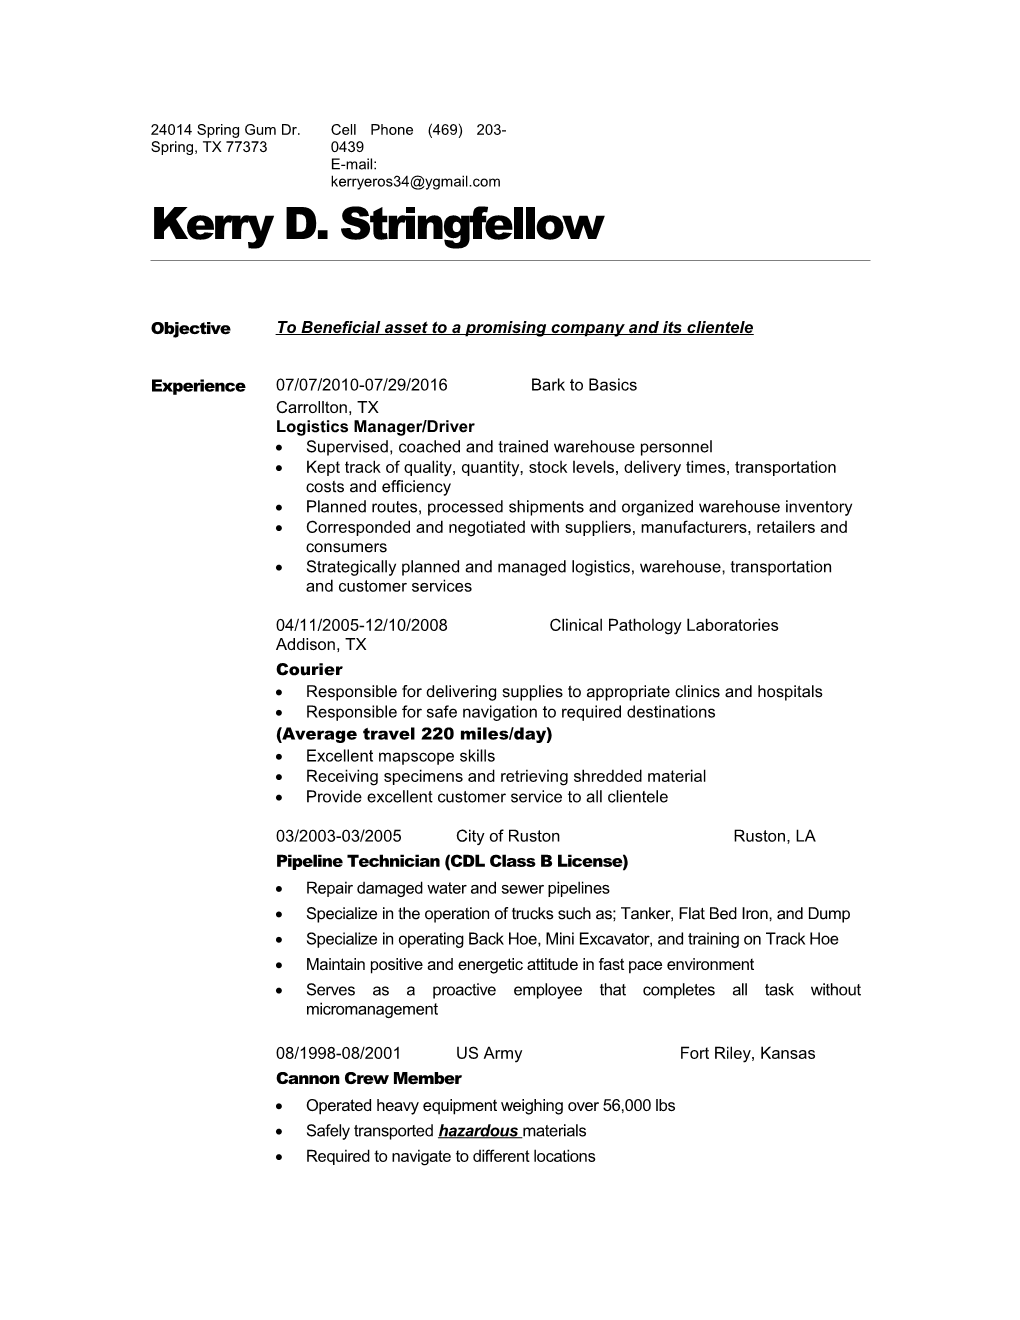 Kerry D. Stringfellow